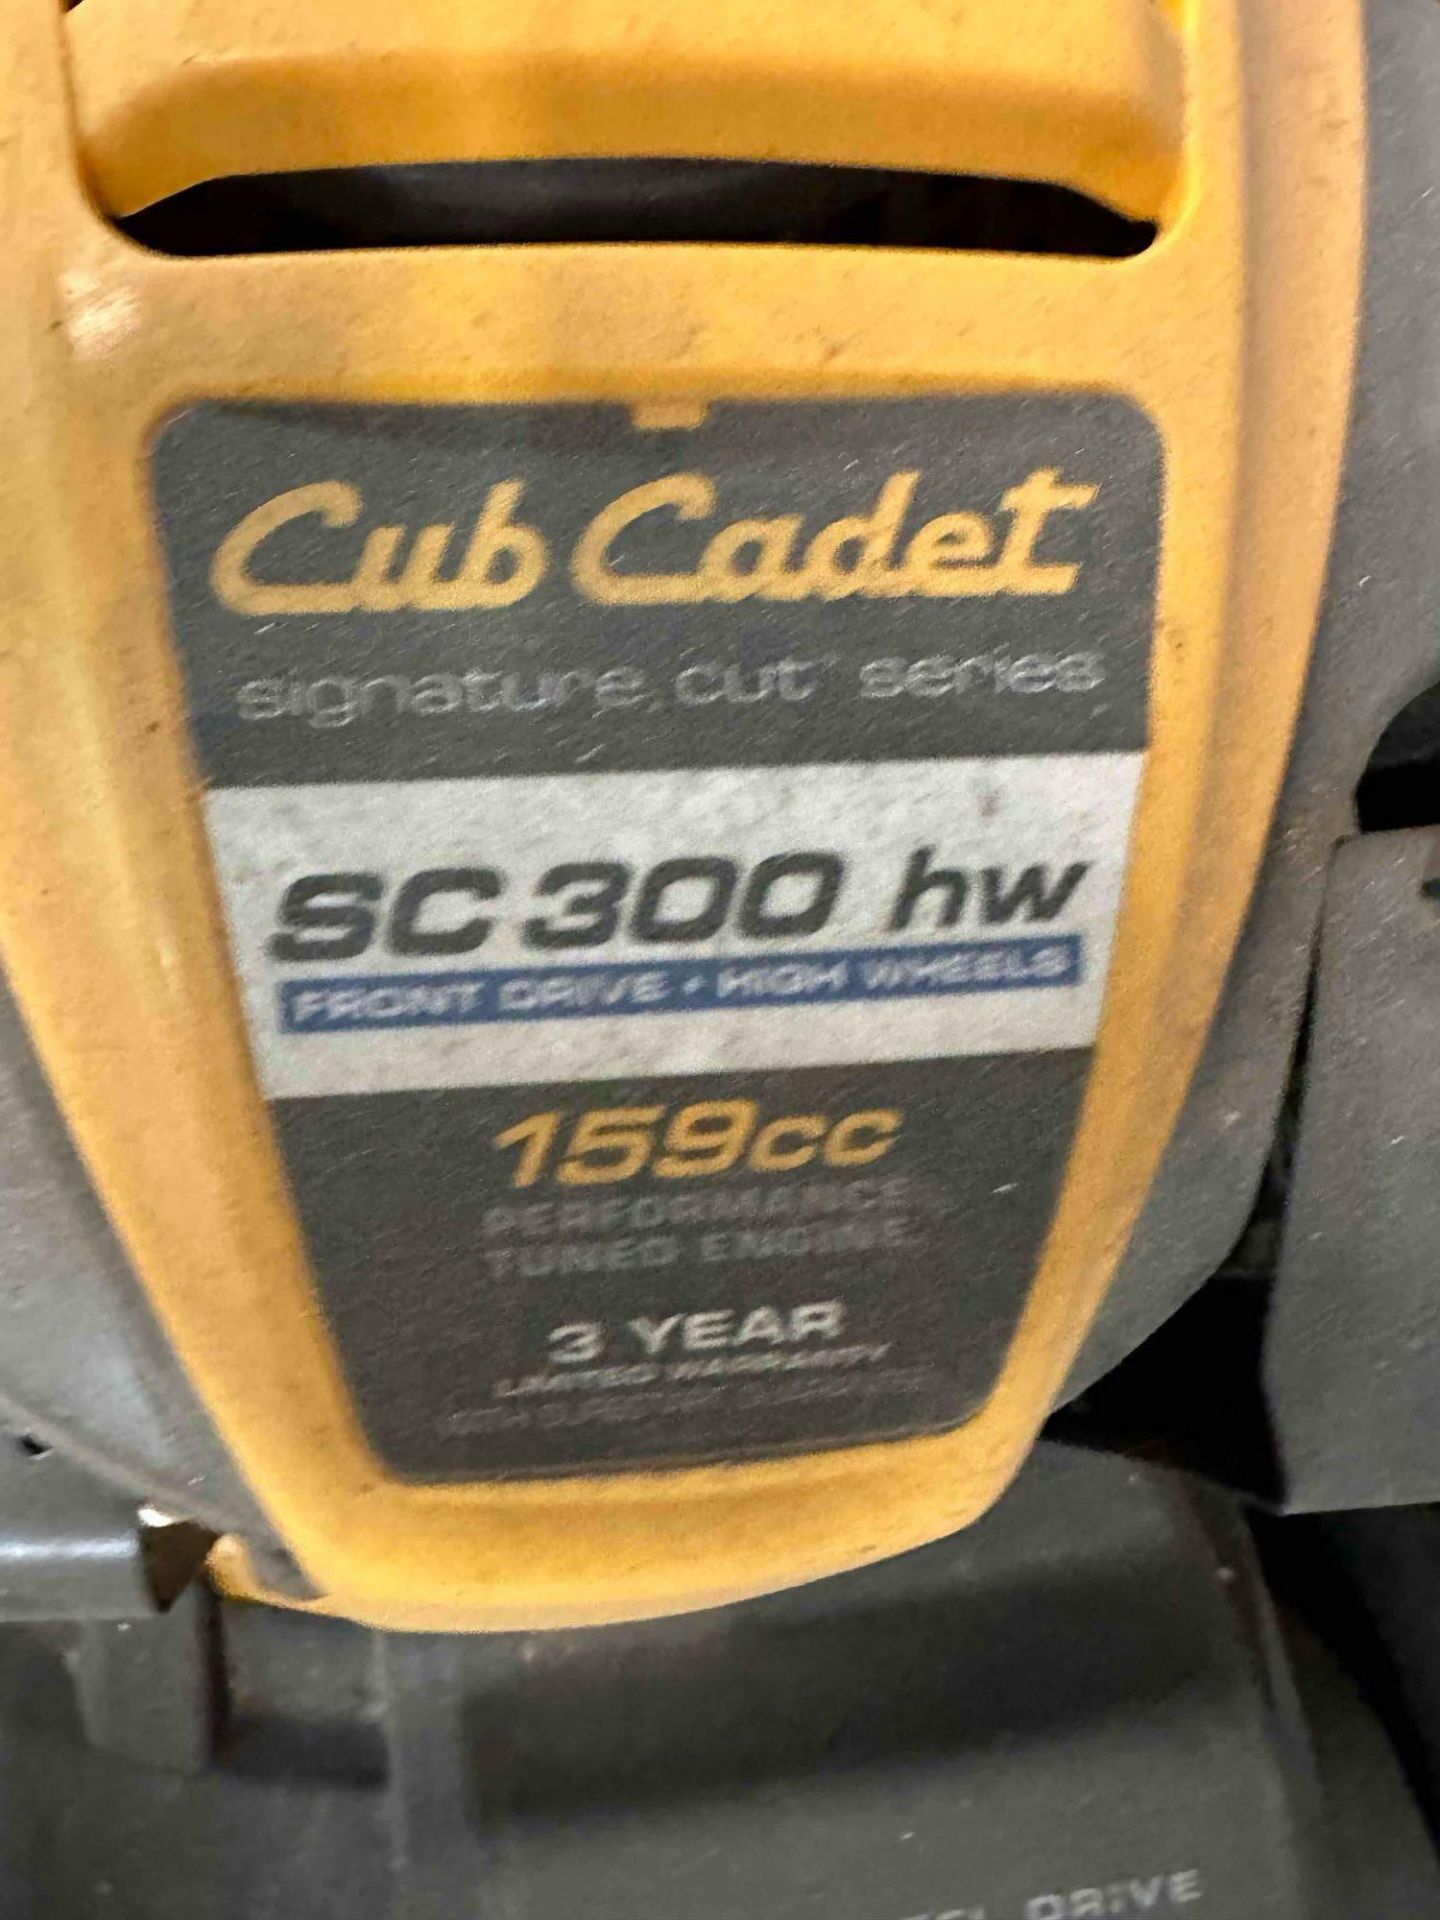 Cub Cadet SC 300 hw signature cut series push mower - Image 4 of 5